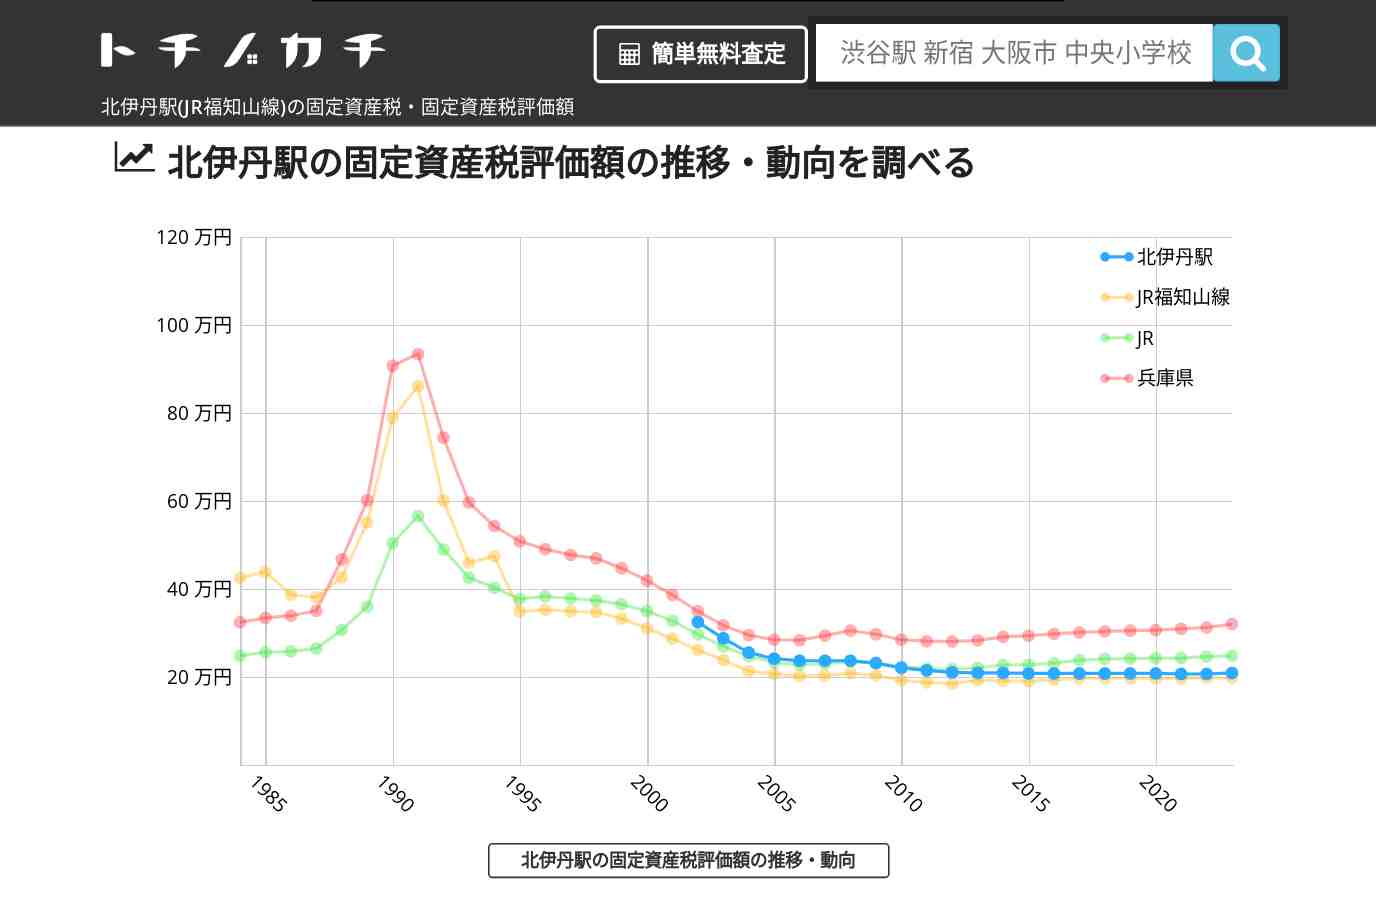 北伊丹駅(JR福知山線)の固定資産税・固定資産税評価額 | トチノカチ